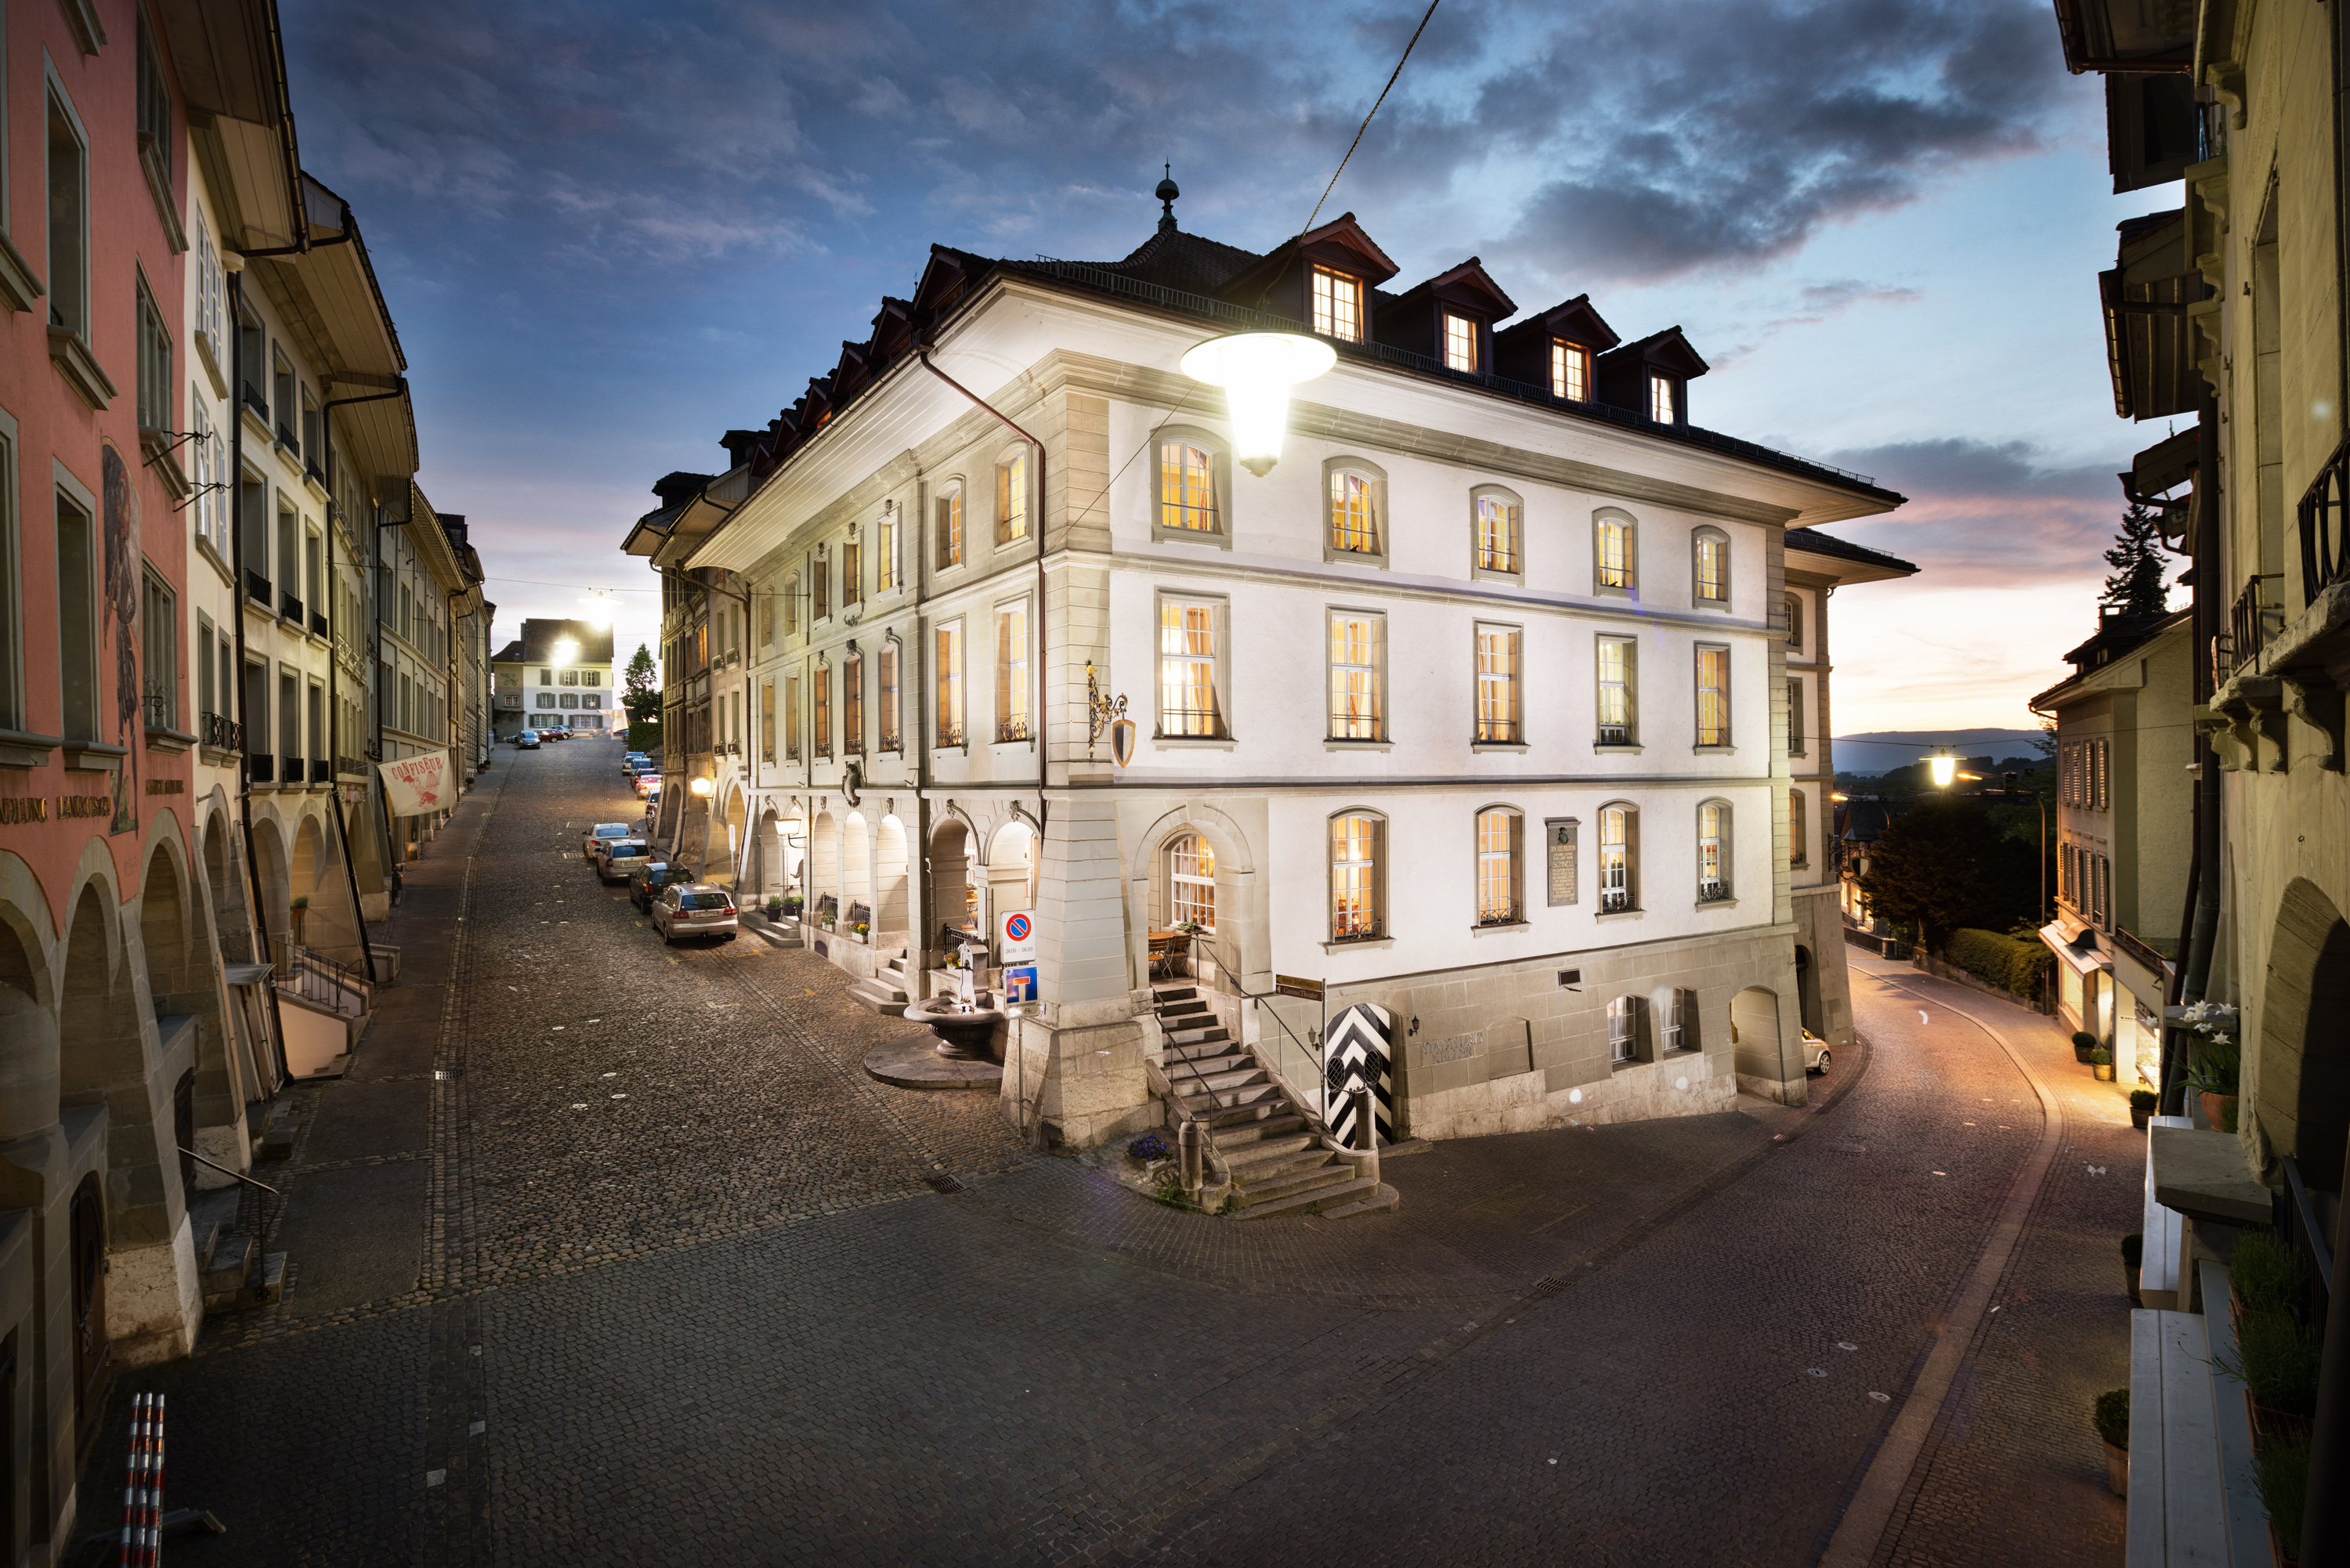 Romantik Hotel Stadthaus, Burgdorf.
